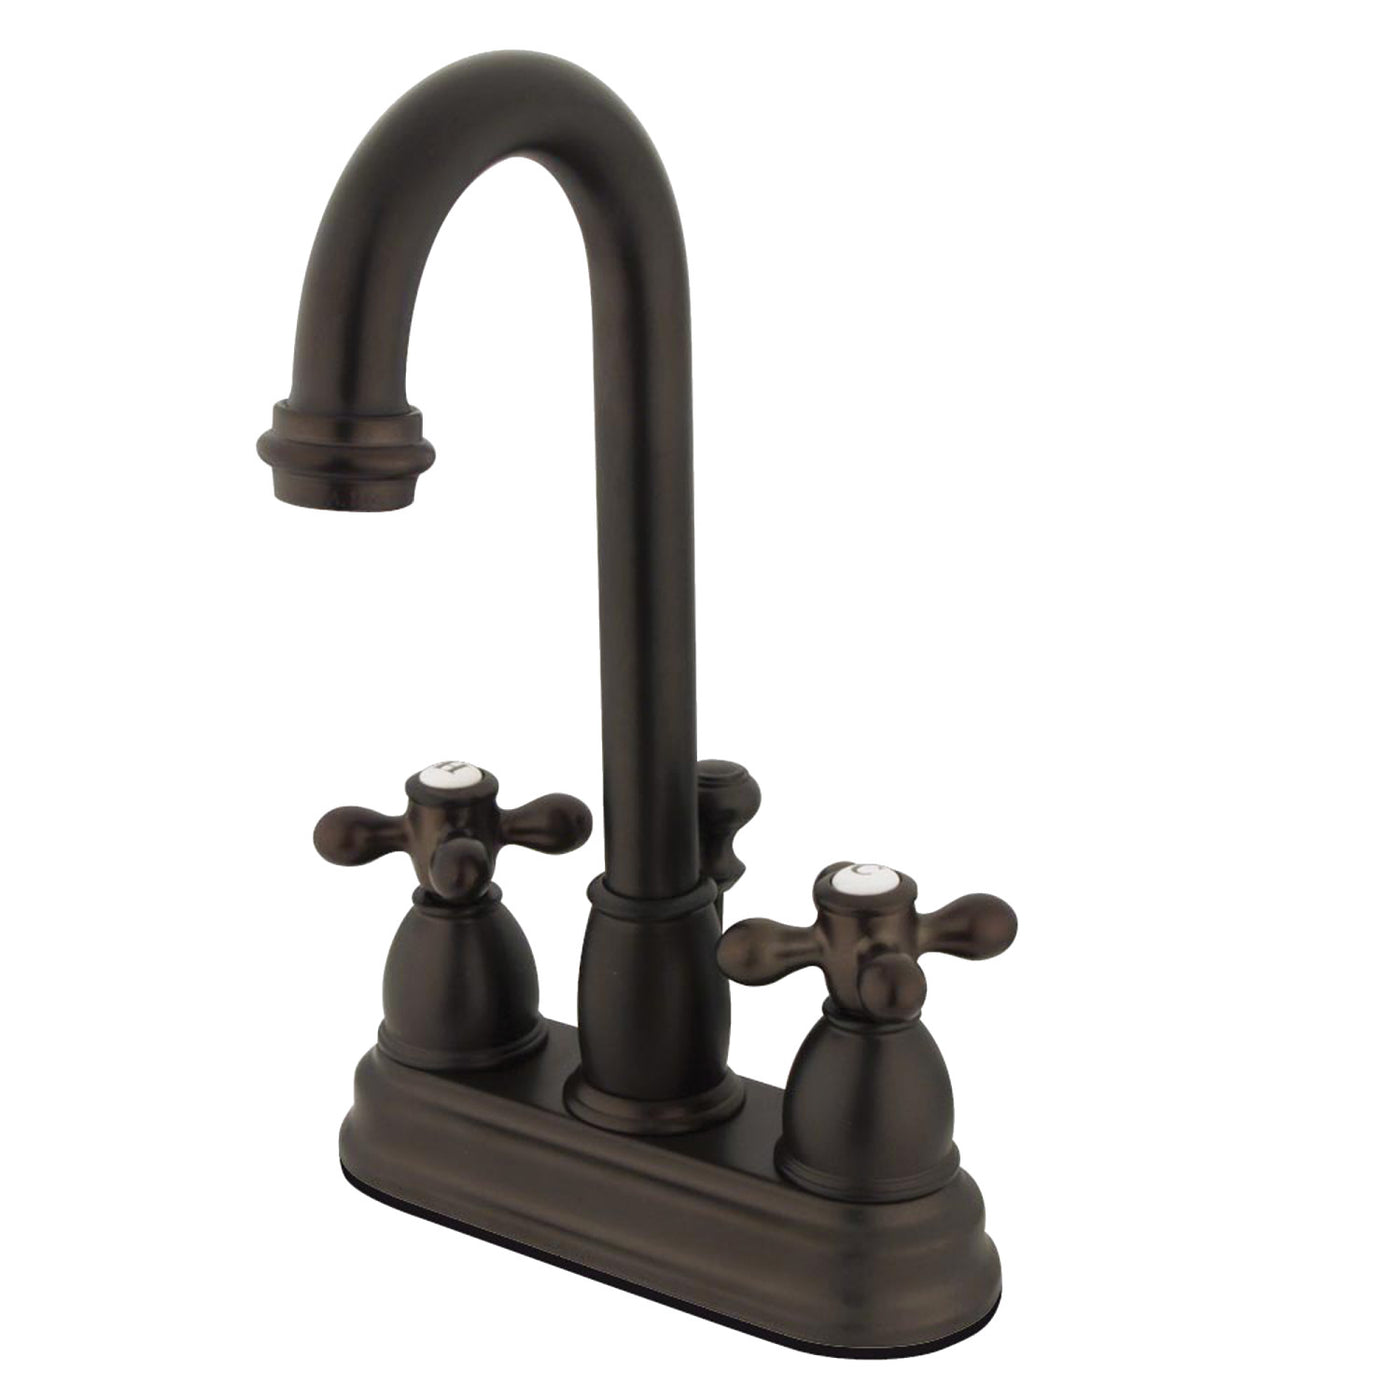 Elements of Design EB3615AX 4-Inch Centerset Bathroom Faucet, Oil Rubbed Bronze